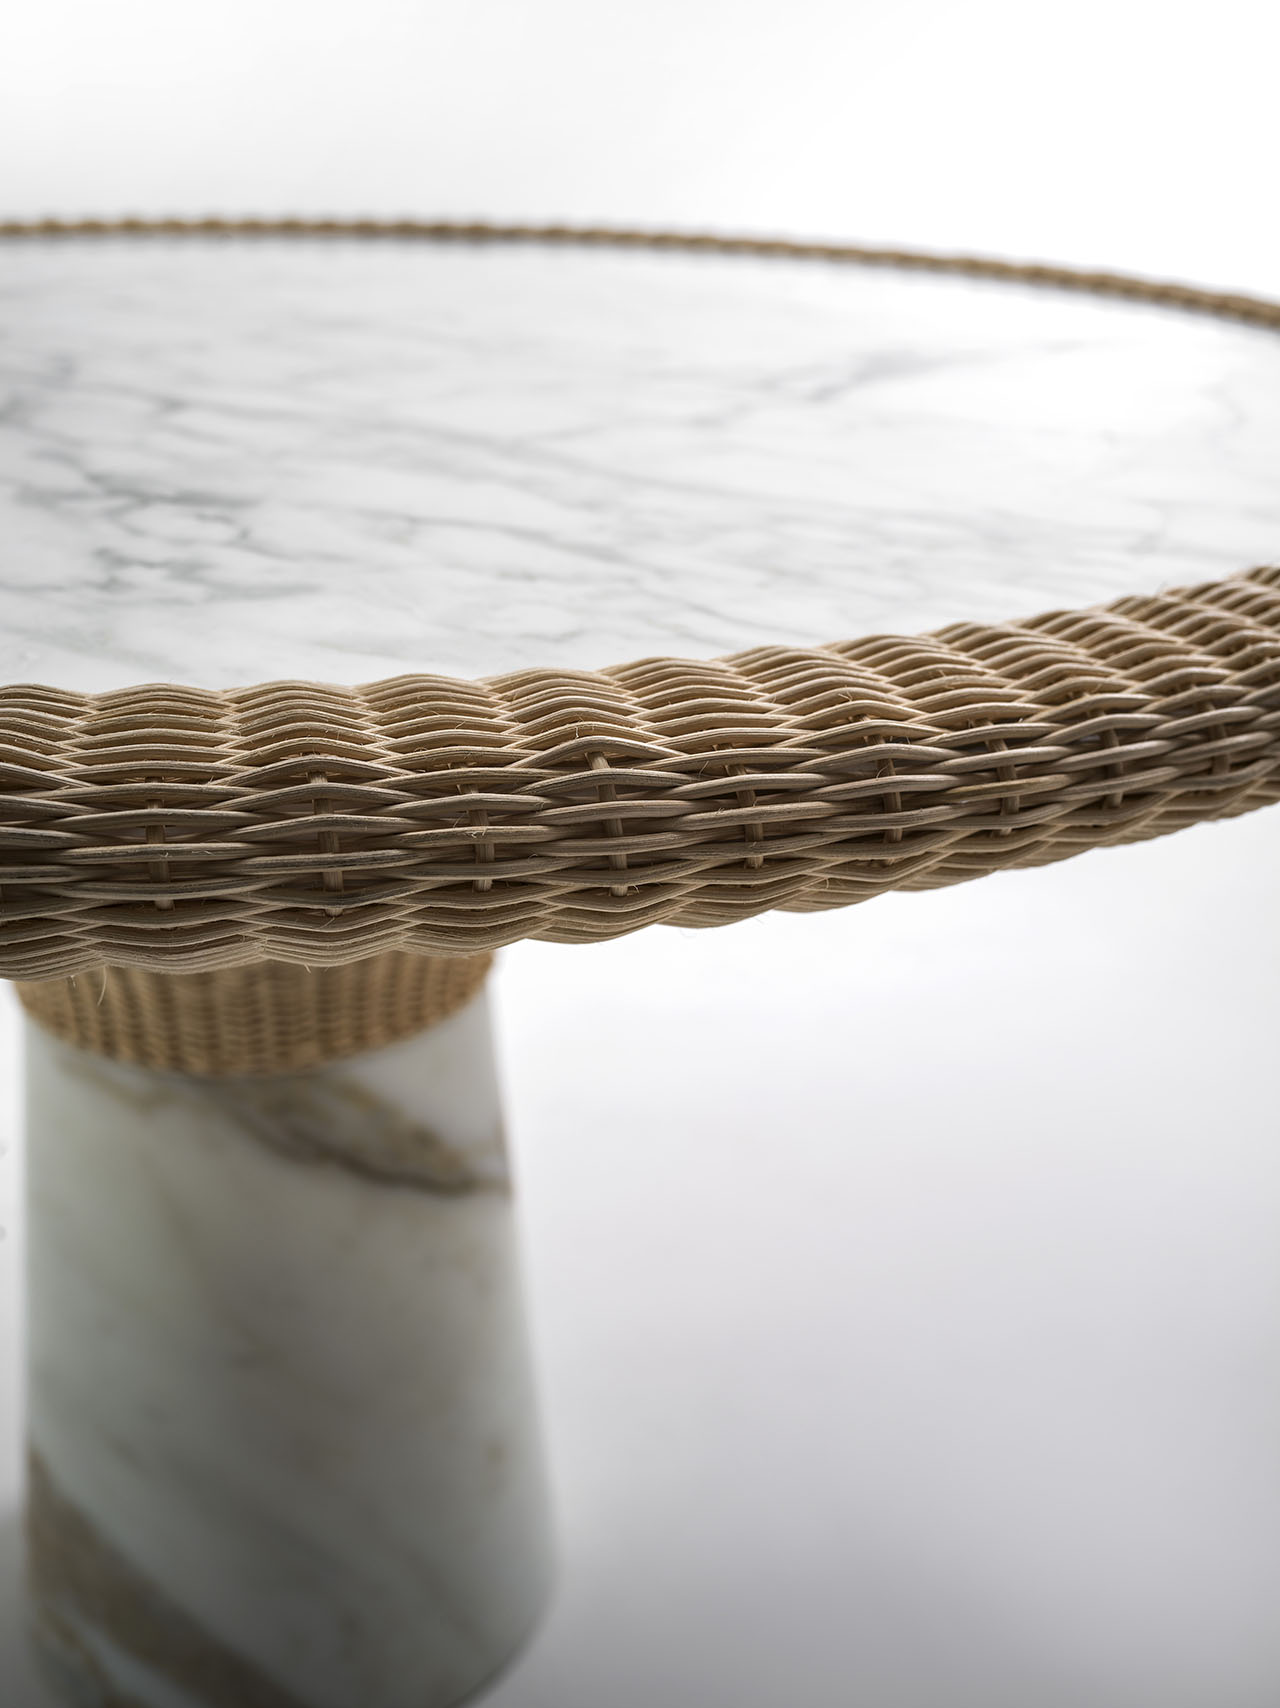 Amazonas collection made of marble &amp; wicker, designed by Giorgio Bonaguro for Morfosi.